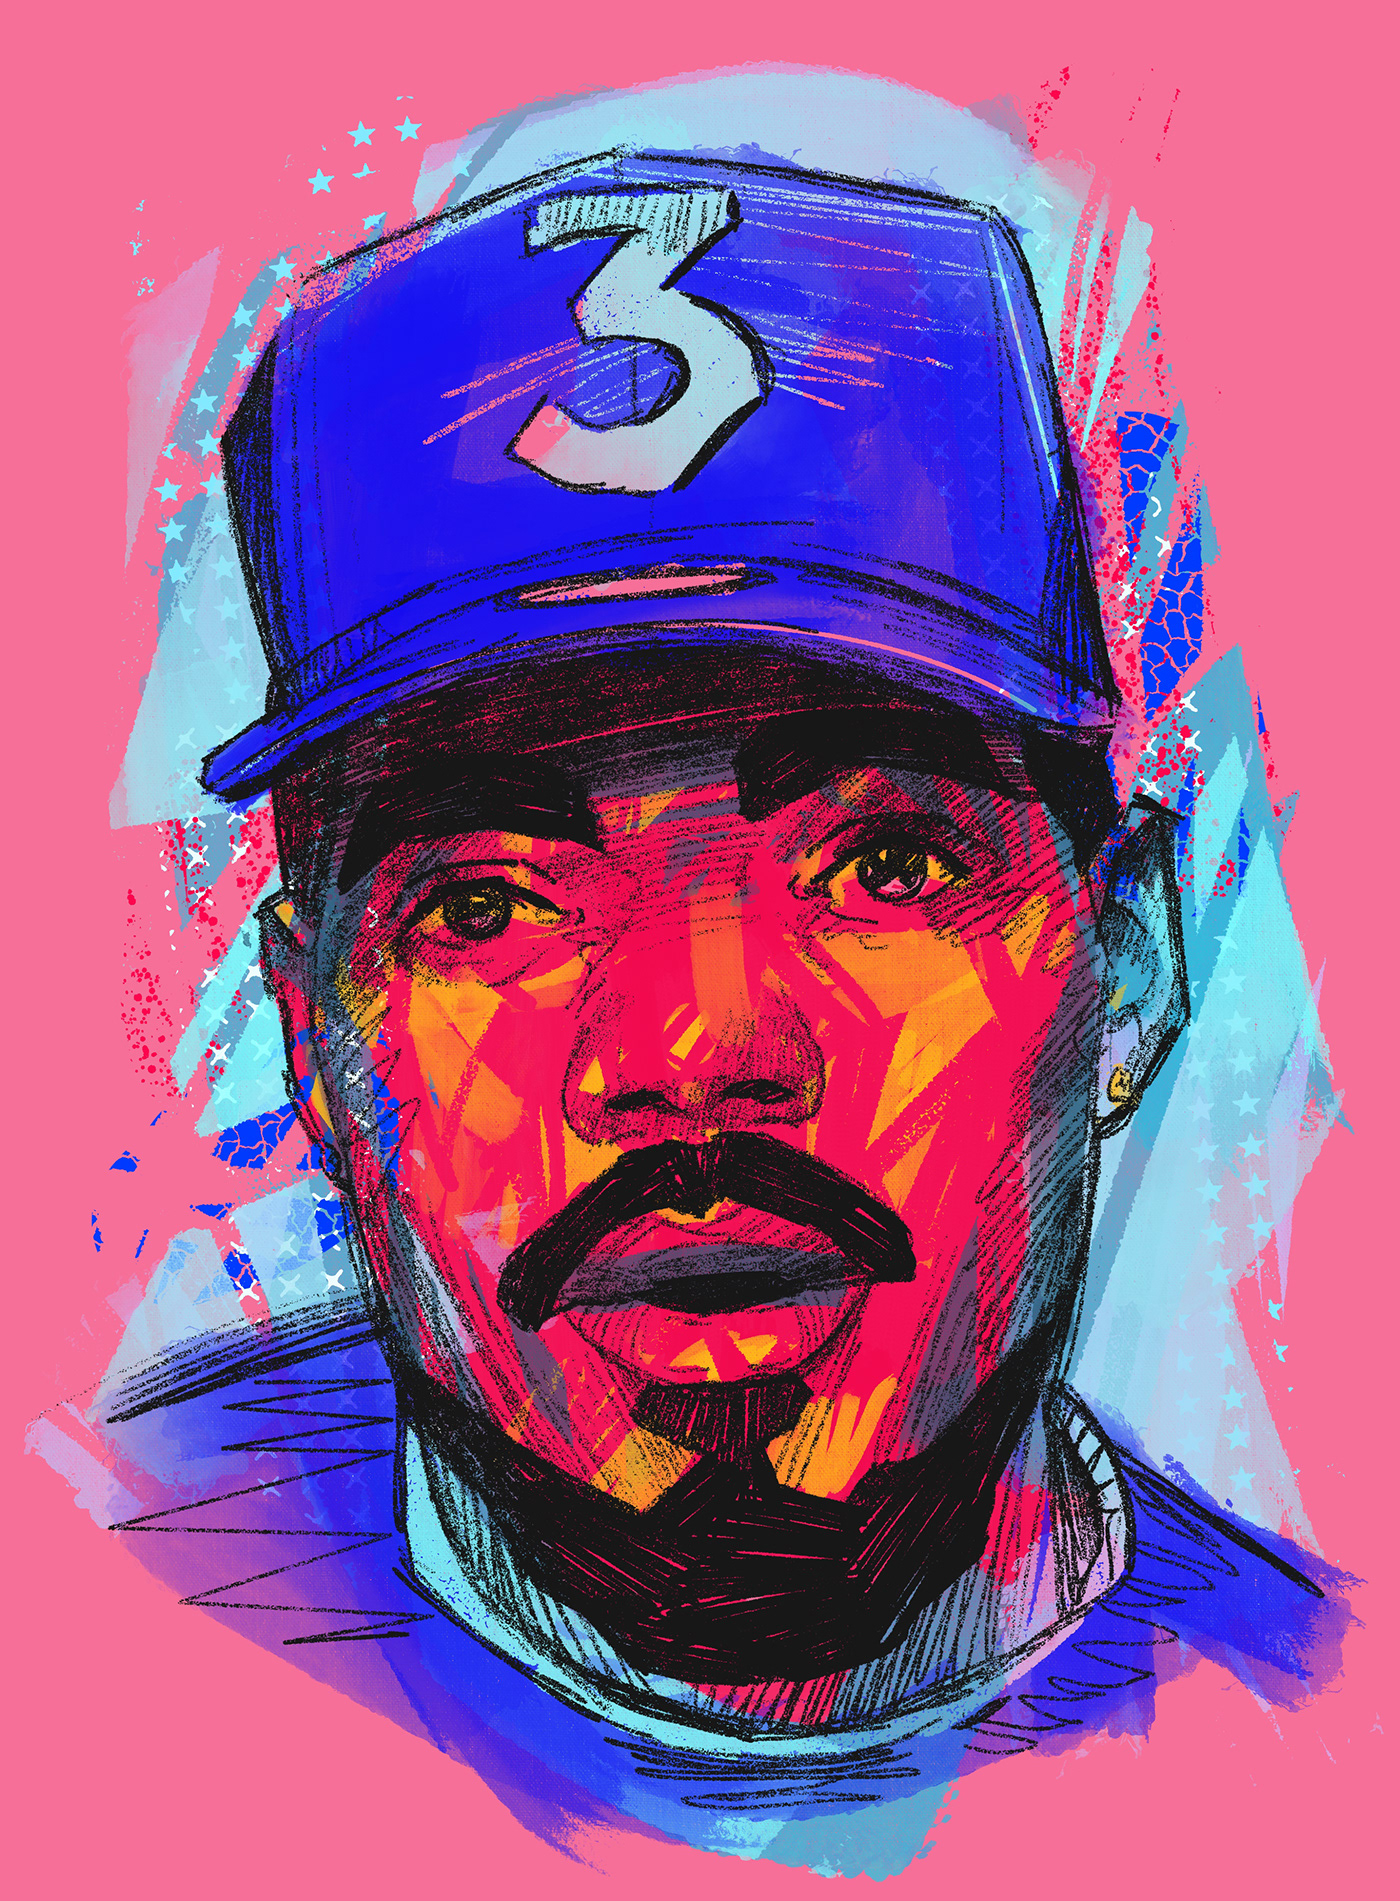 Digital Art  digital illustration illustrated portraits illustrated rappers ILLUSTRATION  Illustrator portrait illustration portrait illustrator procreate illustrations Rappers